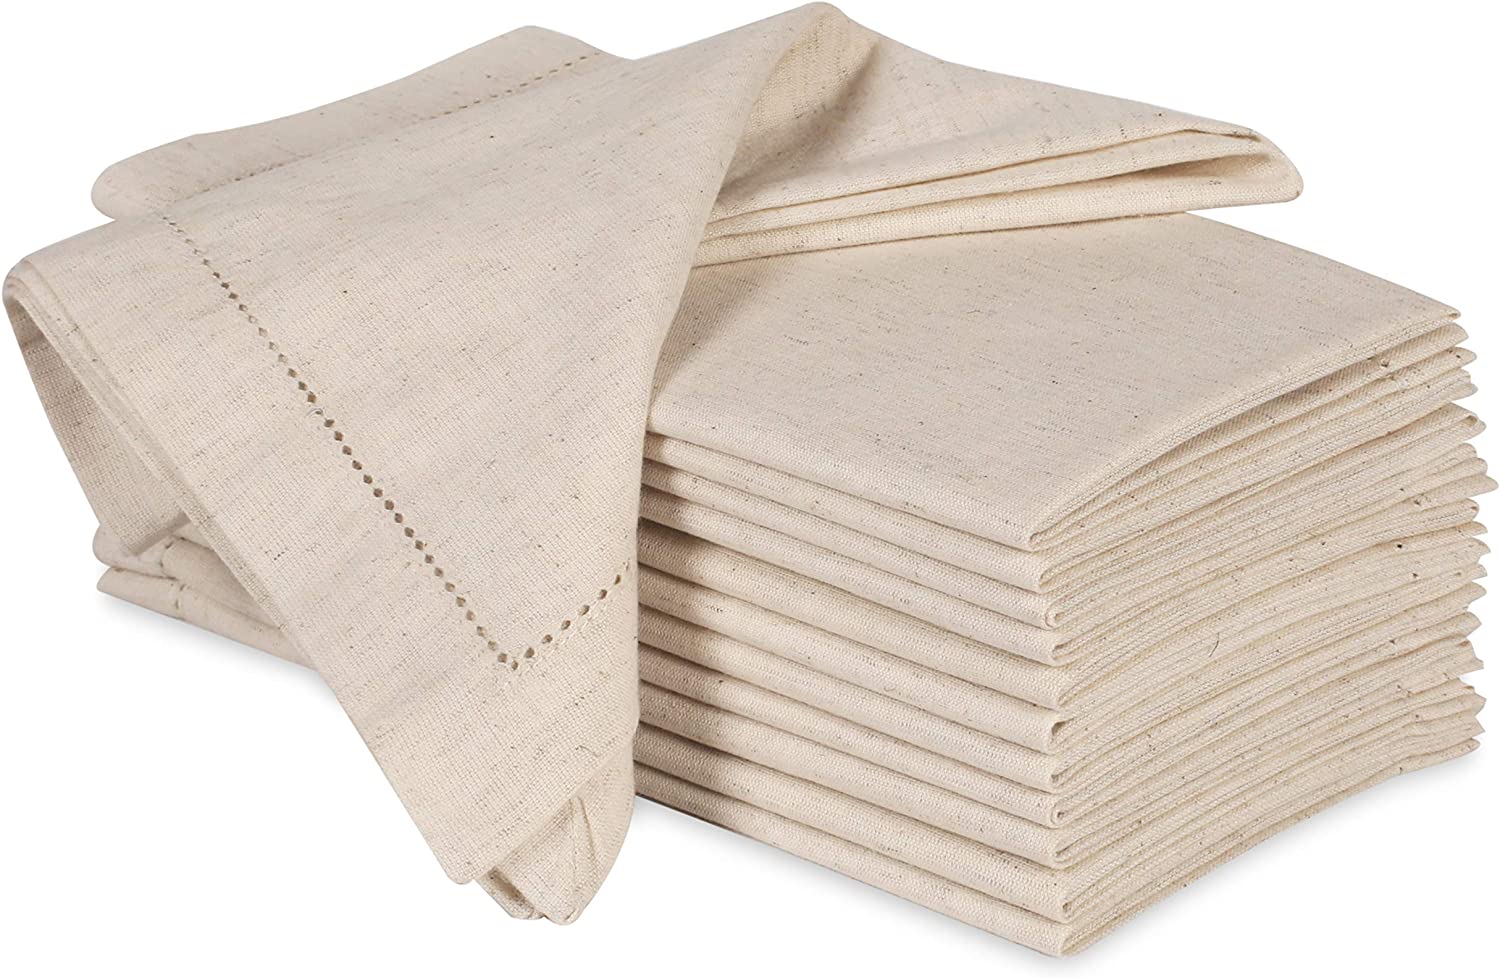 https://www.dontwasteyourmoney.com/wp-content/uploads/2023/05/ramanta-home-oversized-cotton-flax-cloth-napkins-12-count-cloth-napkins.jpg